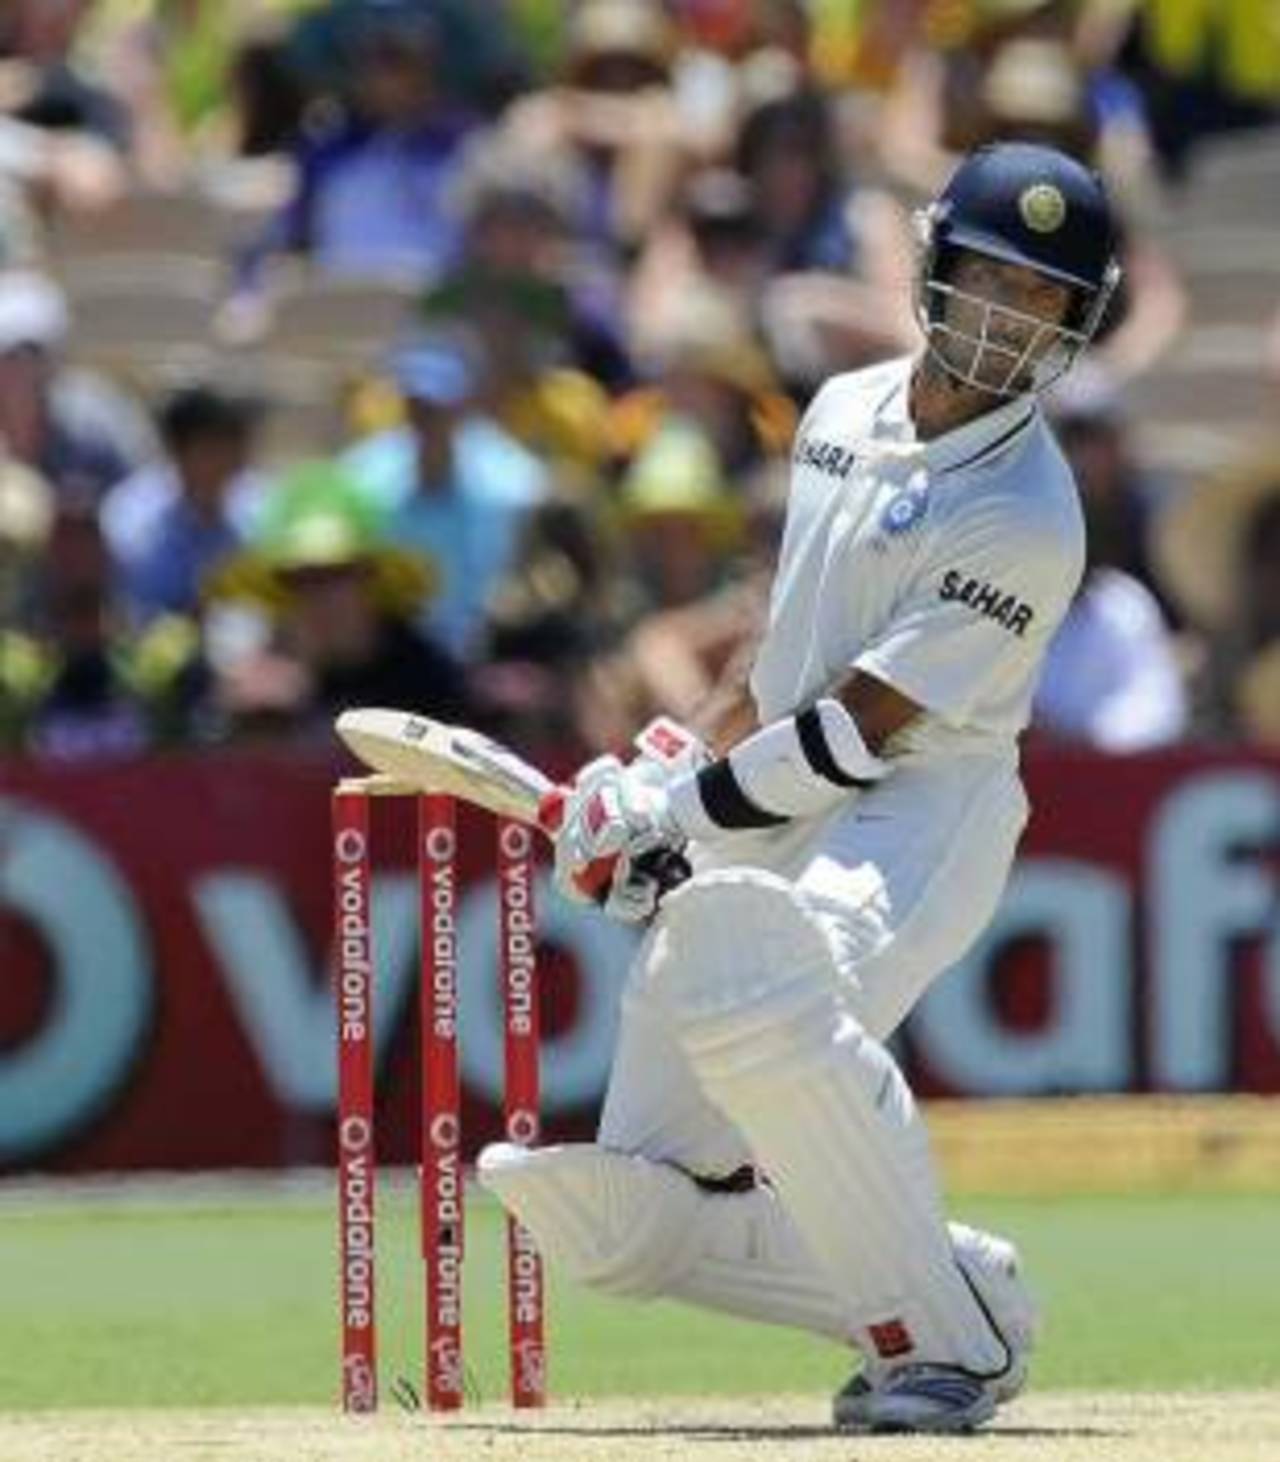 Wriddhiman Saha evades a short ball, Australia v India, 4th Test, Adelaide, 3rd day, January 26, 2012